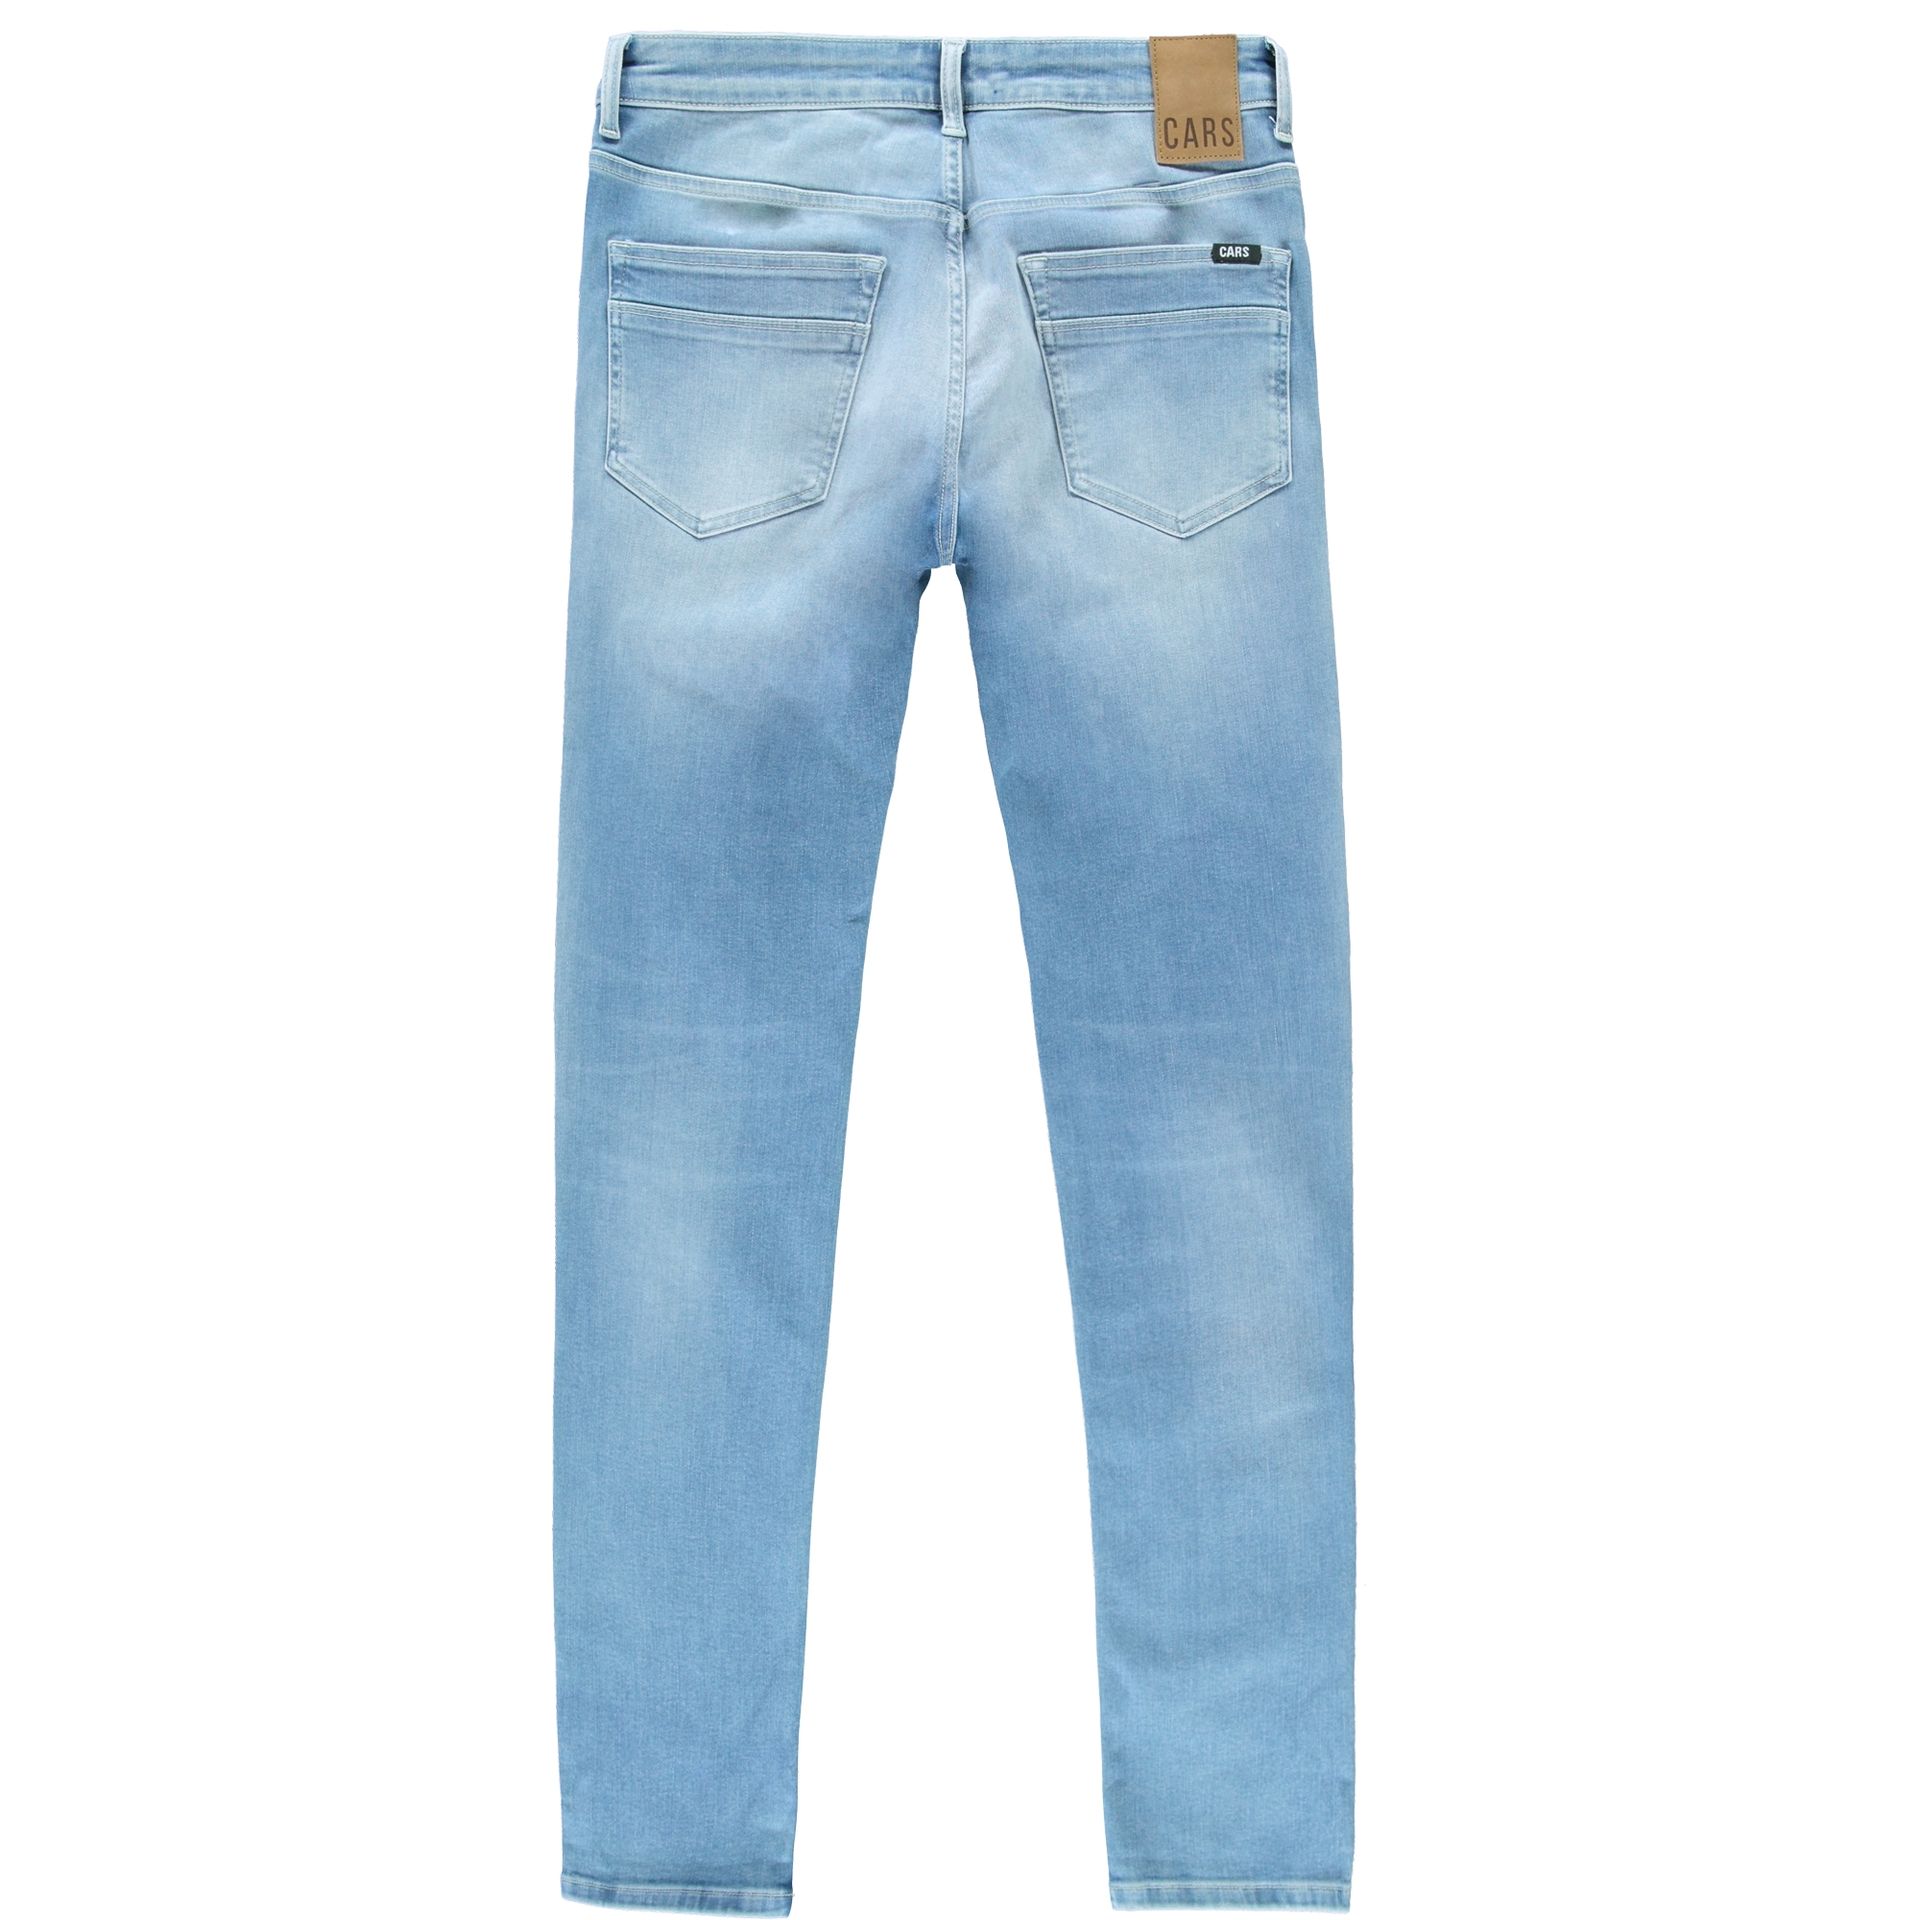 Cars jeans Jeans Bates Slim fit 95 porto wash 00108286-EKA03000200000021